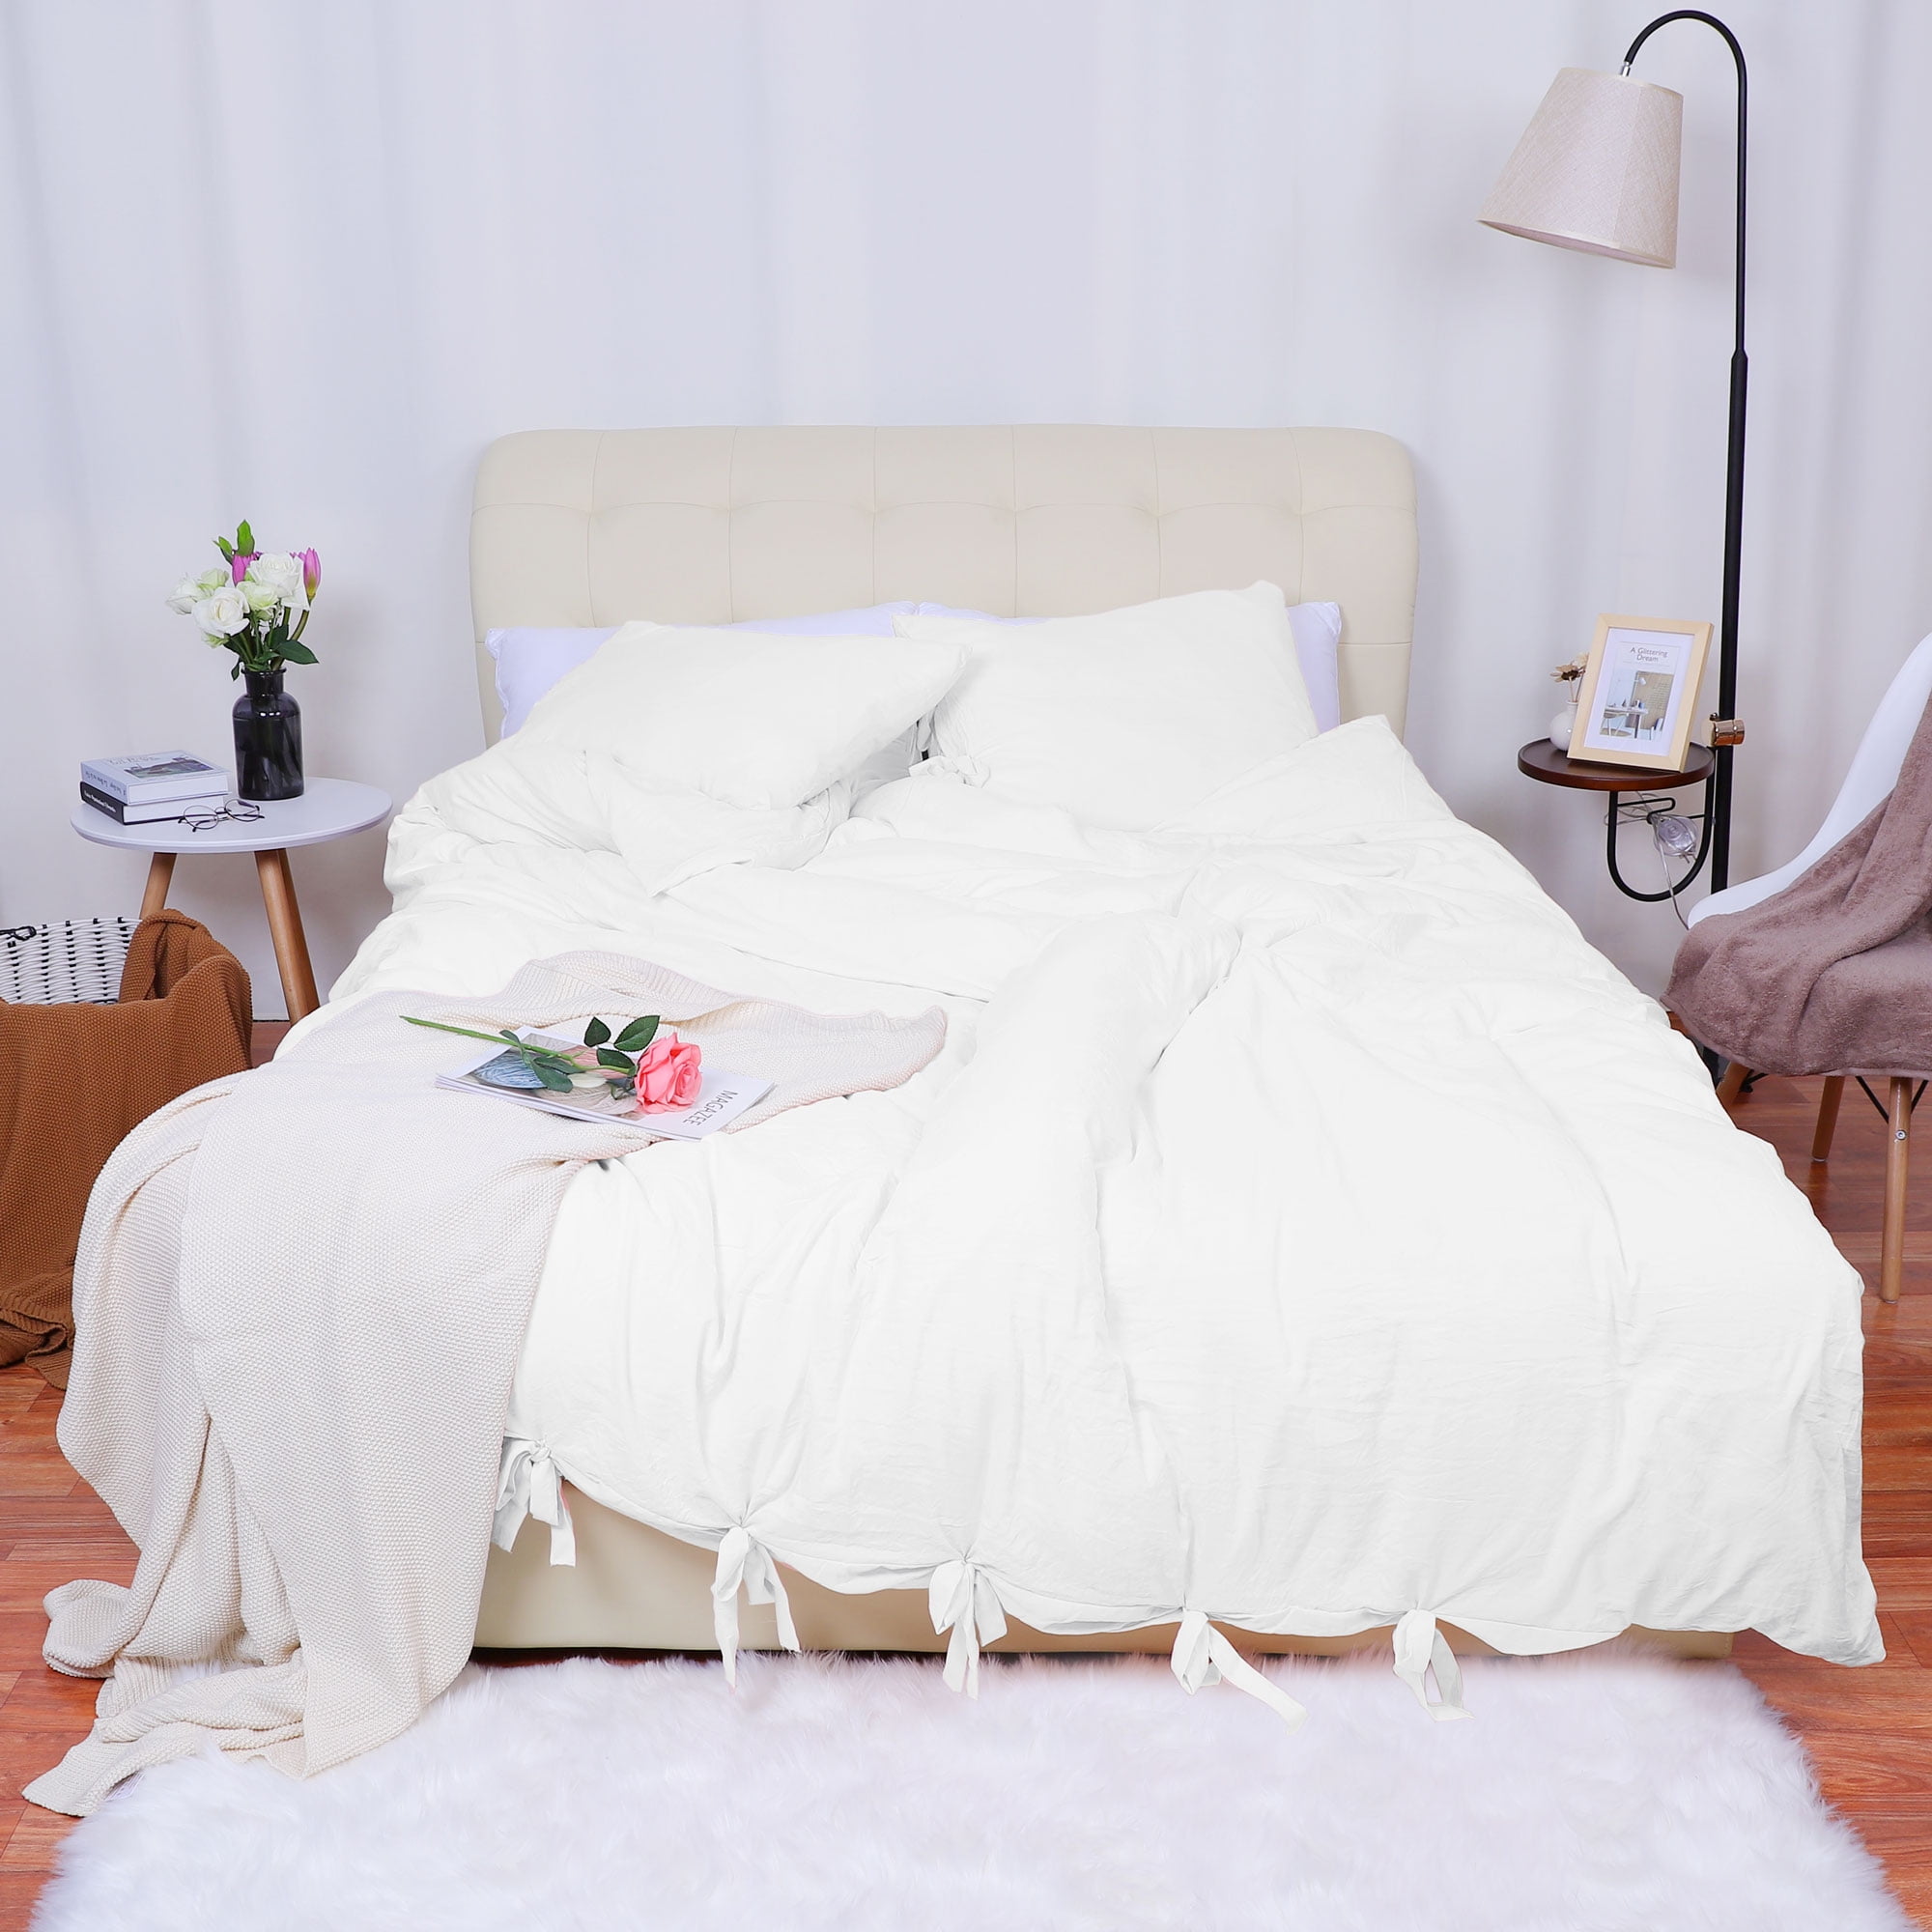 white duvet cover and pillowcases